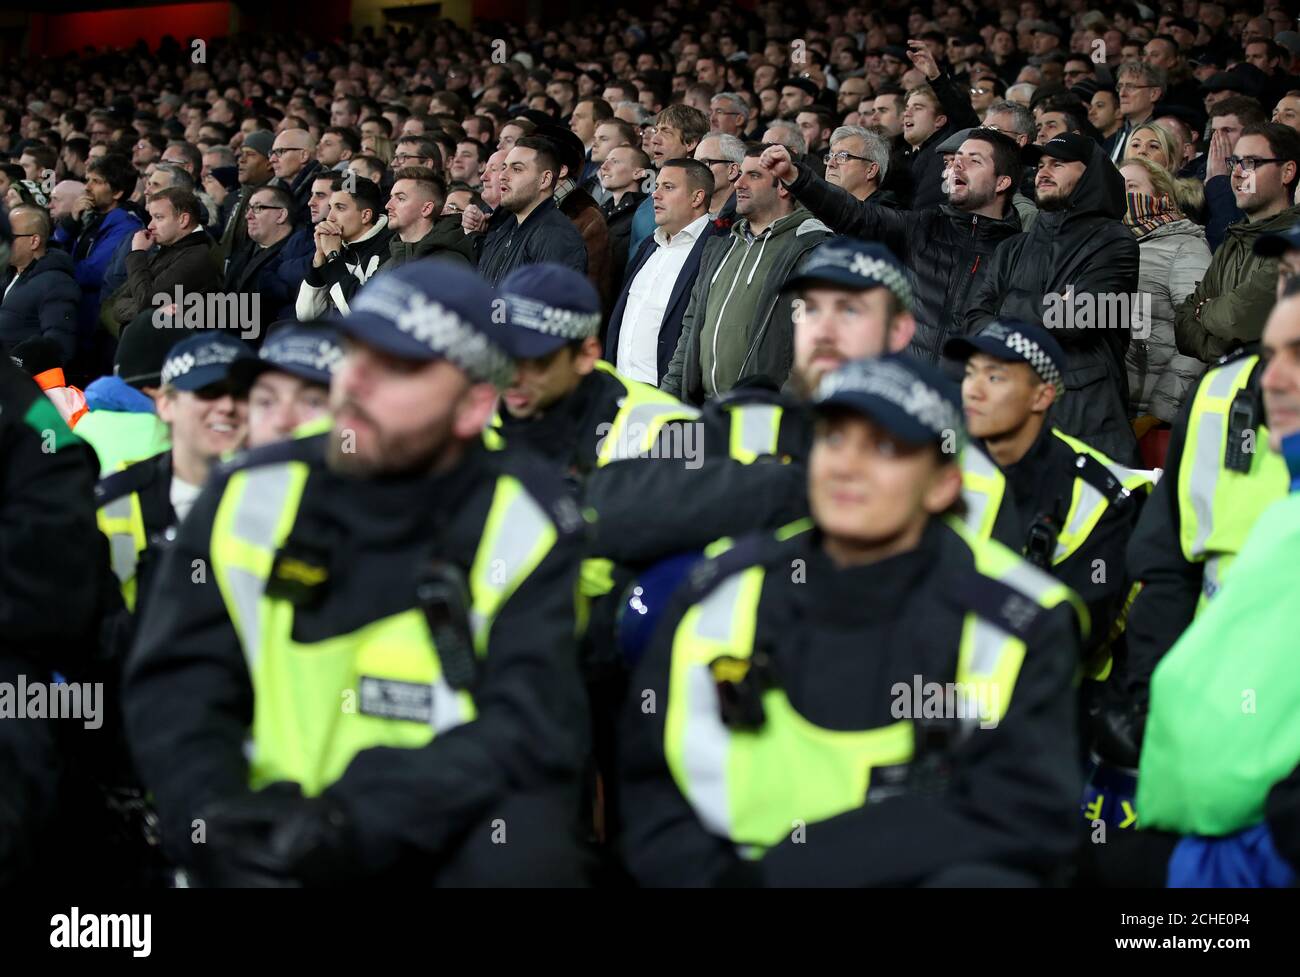 Polizei vor den Tottenham Hotspur-Fans beim Carabao Cup Quarter Final Match im Emirates Stadium, London. Stockfoto